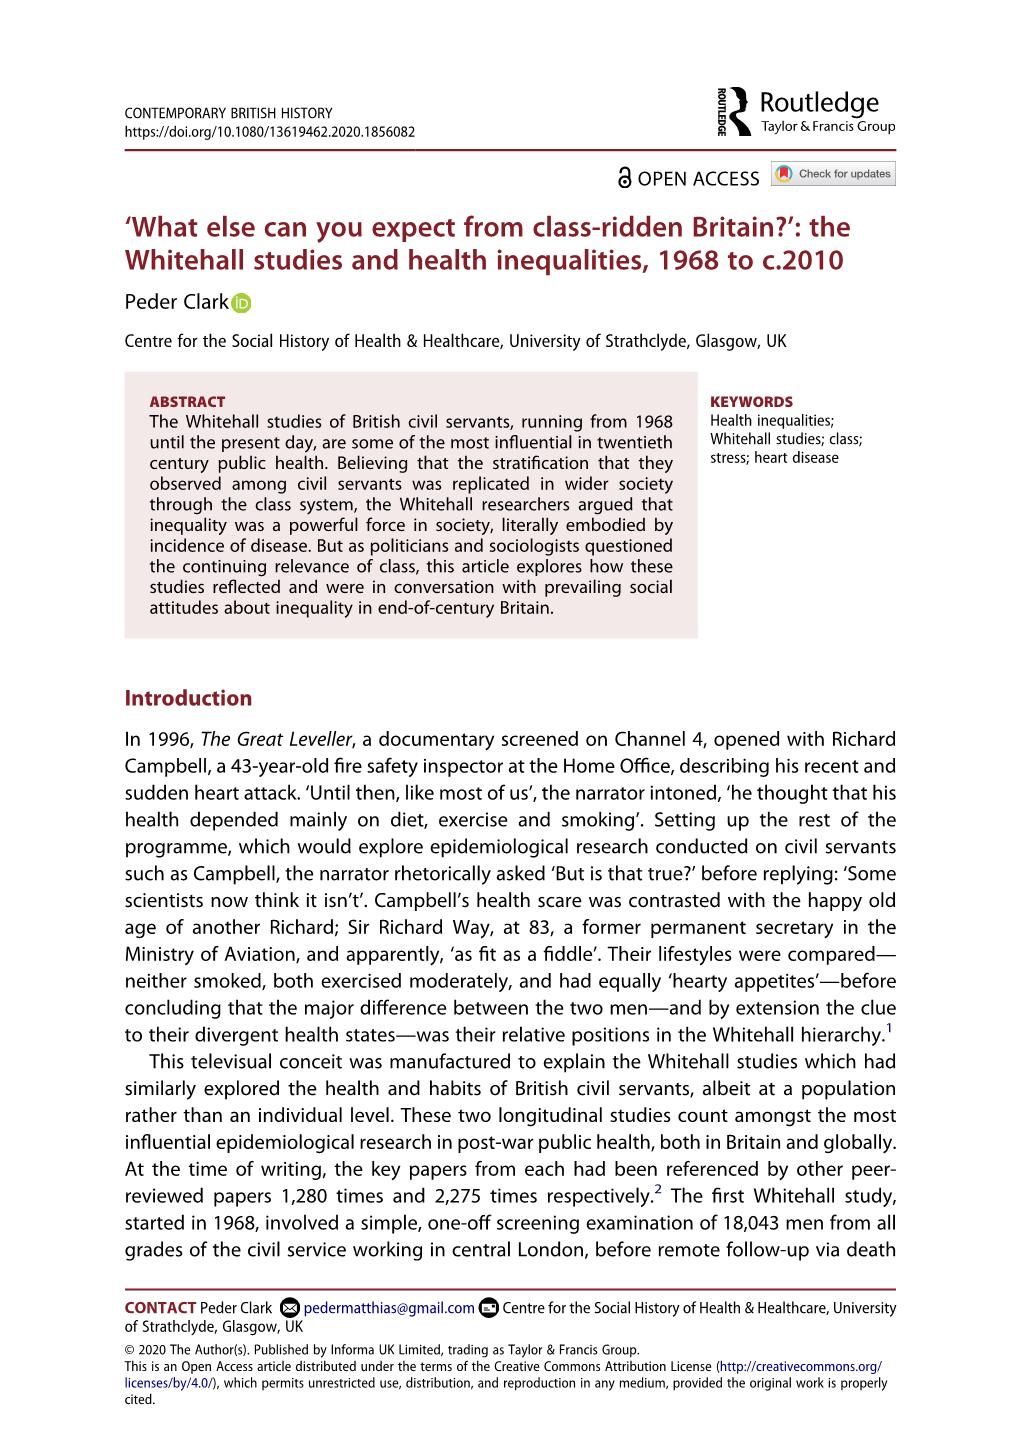 The Whitehall Studies and Health Inequalities, 1968 to C.2010 Peder Clark